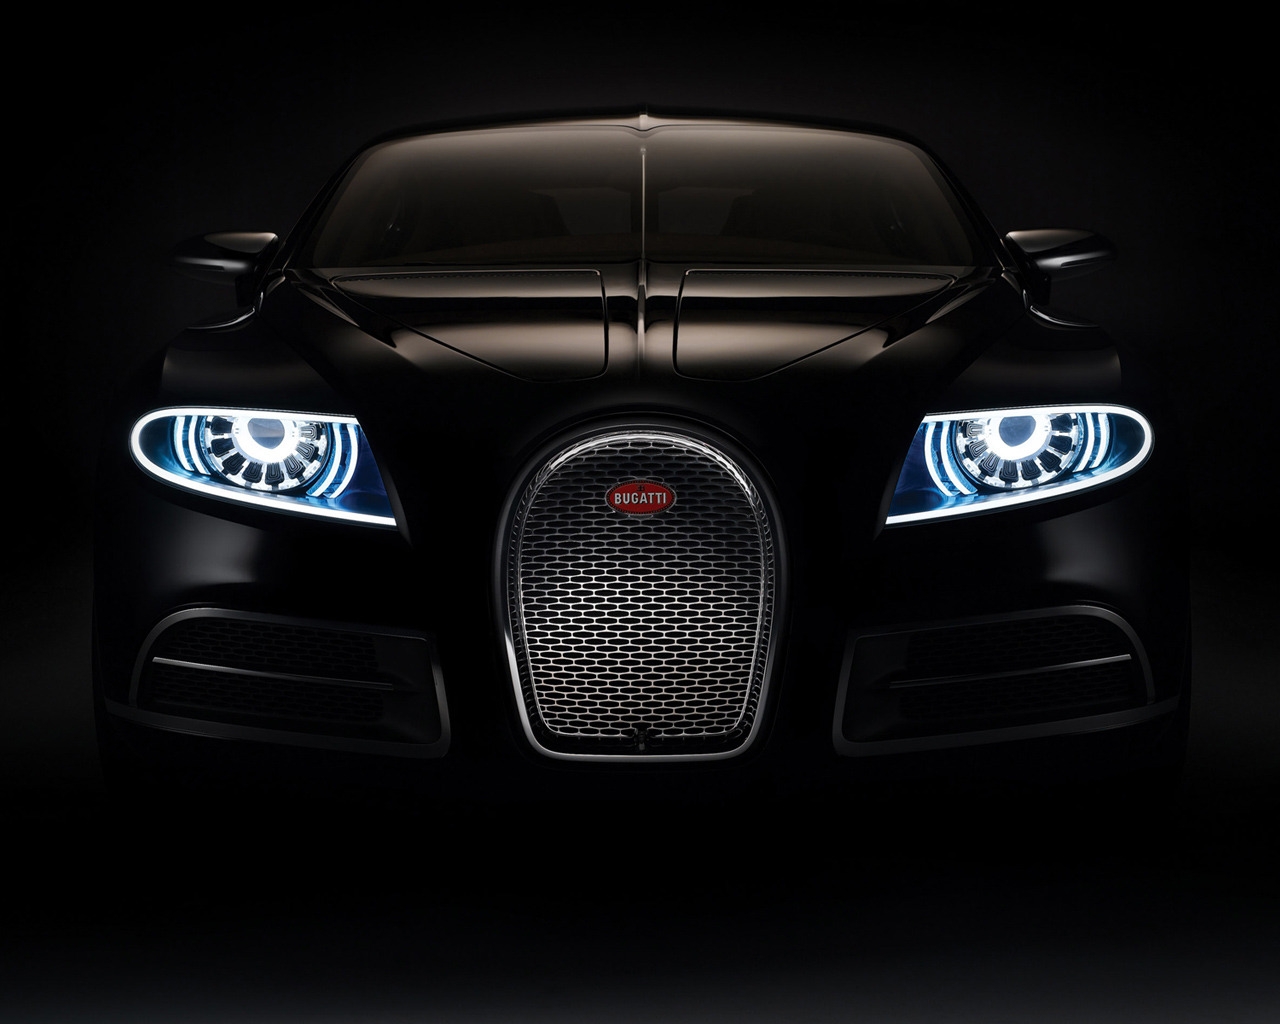 Bugatti 16C Galibier Front for 1280 x 1024 resolution